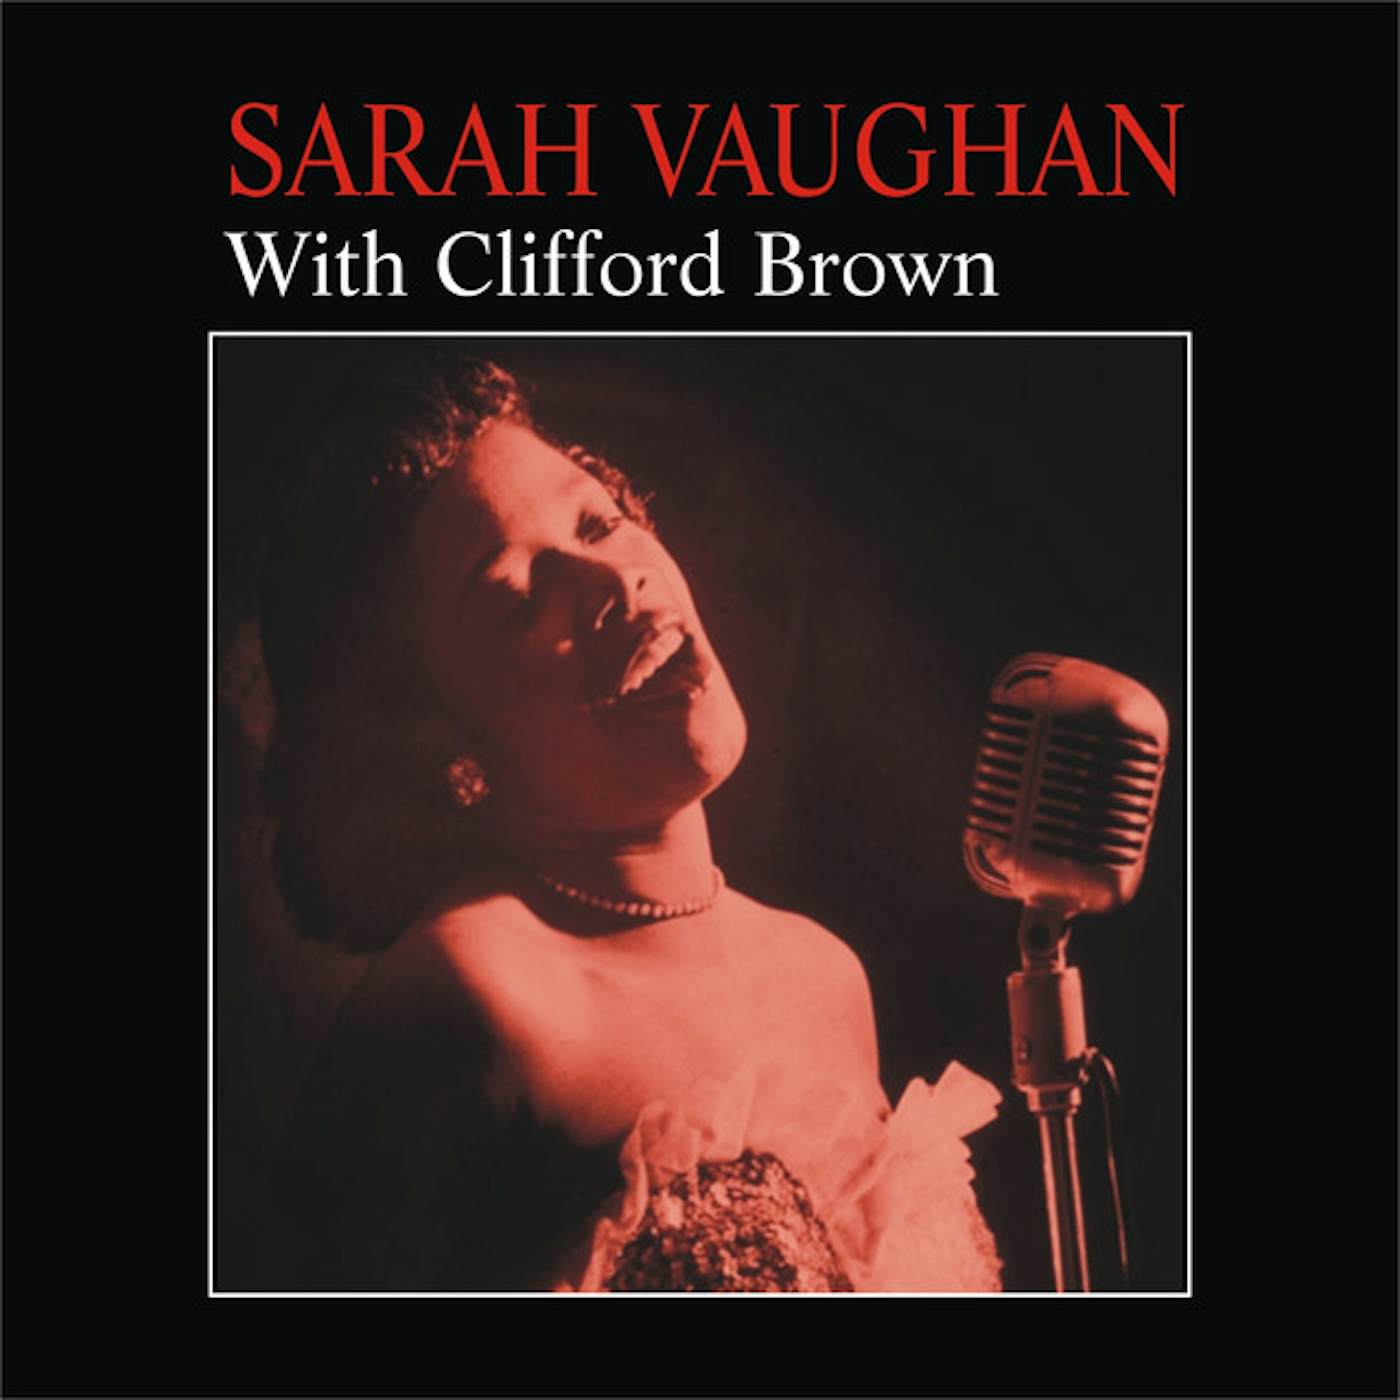 Sarah Vaughan WITH CLIFFORD BROWN (BONUS TRACK) Vinyl Record - 180 Gram Pressing, Remastered